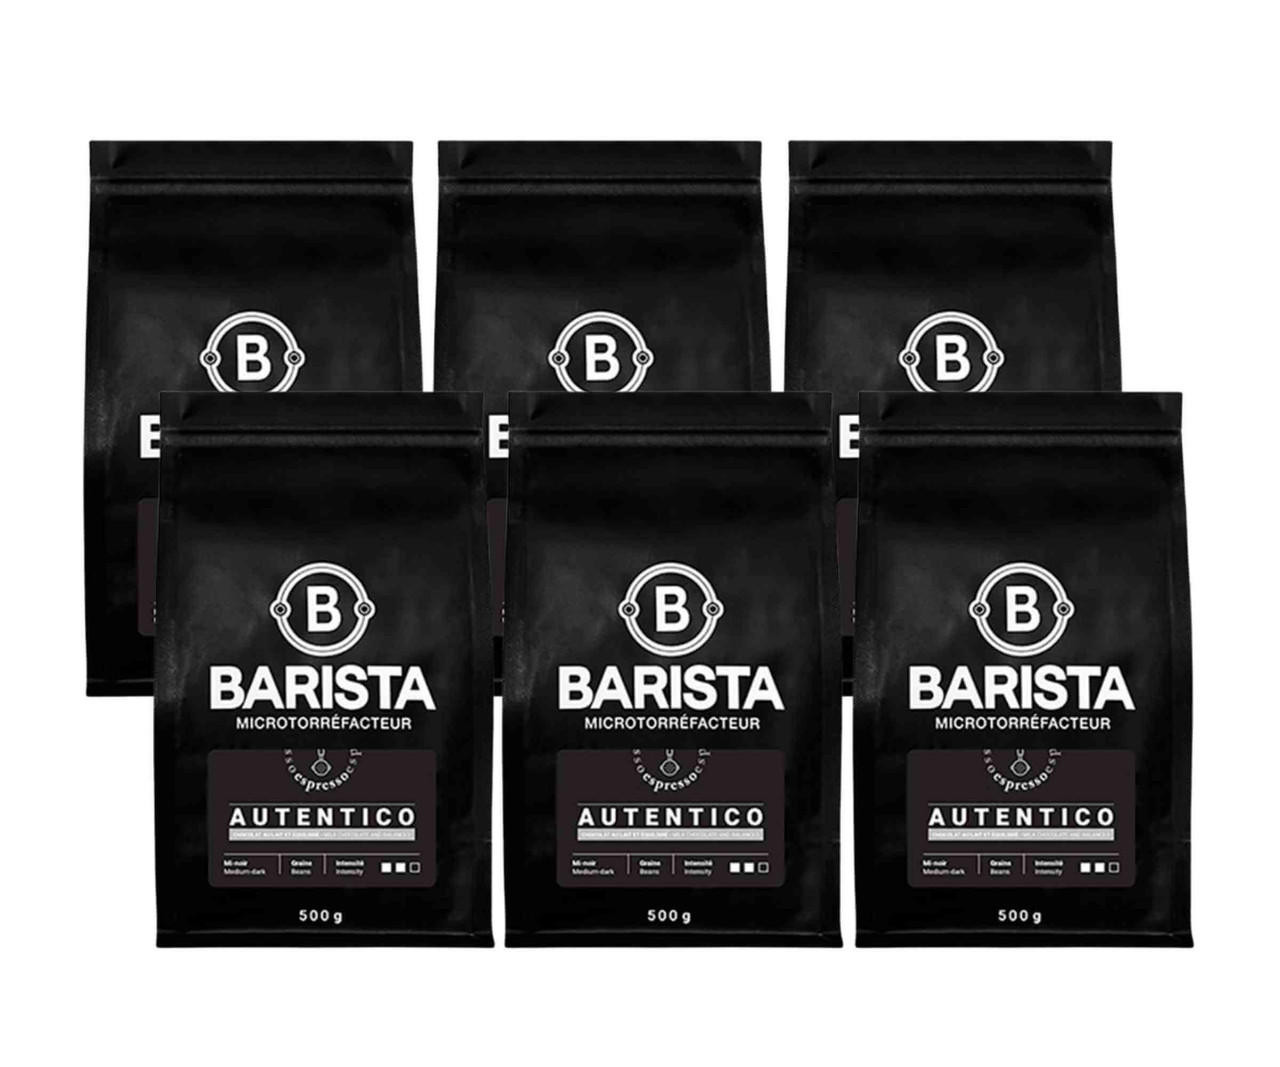  Café Barista AUTENTICO Medium Blend Coffee Beans - 1.1 lbs / 0.5 kg Bag (6/Case) 